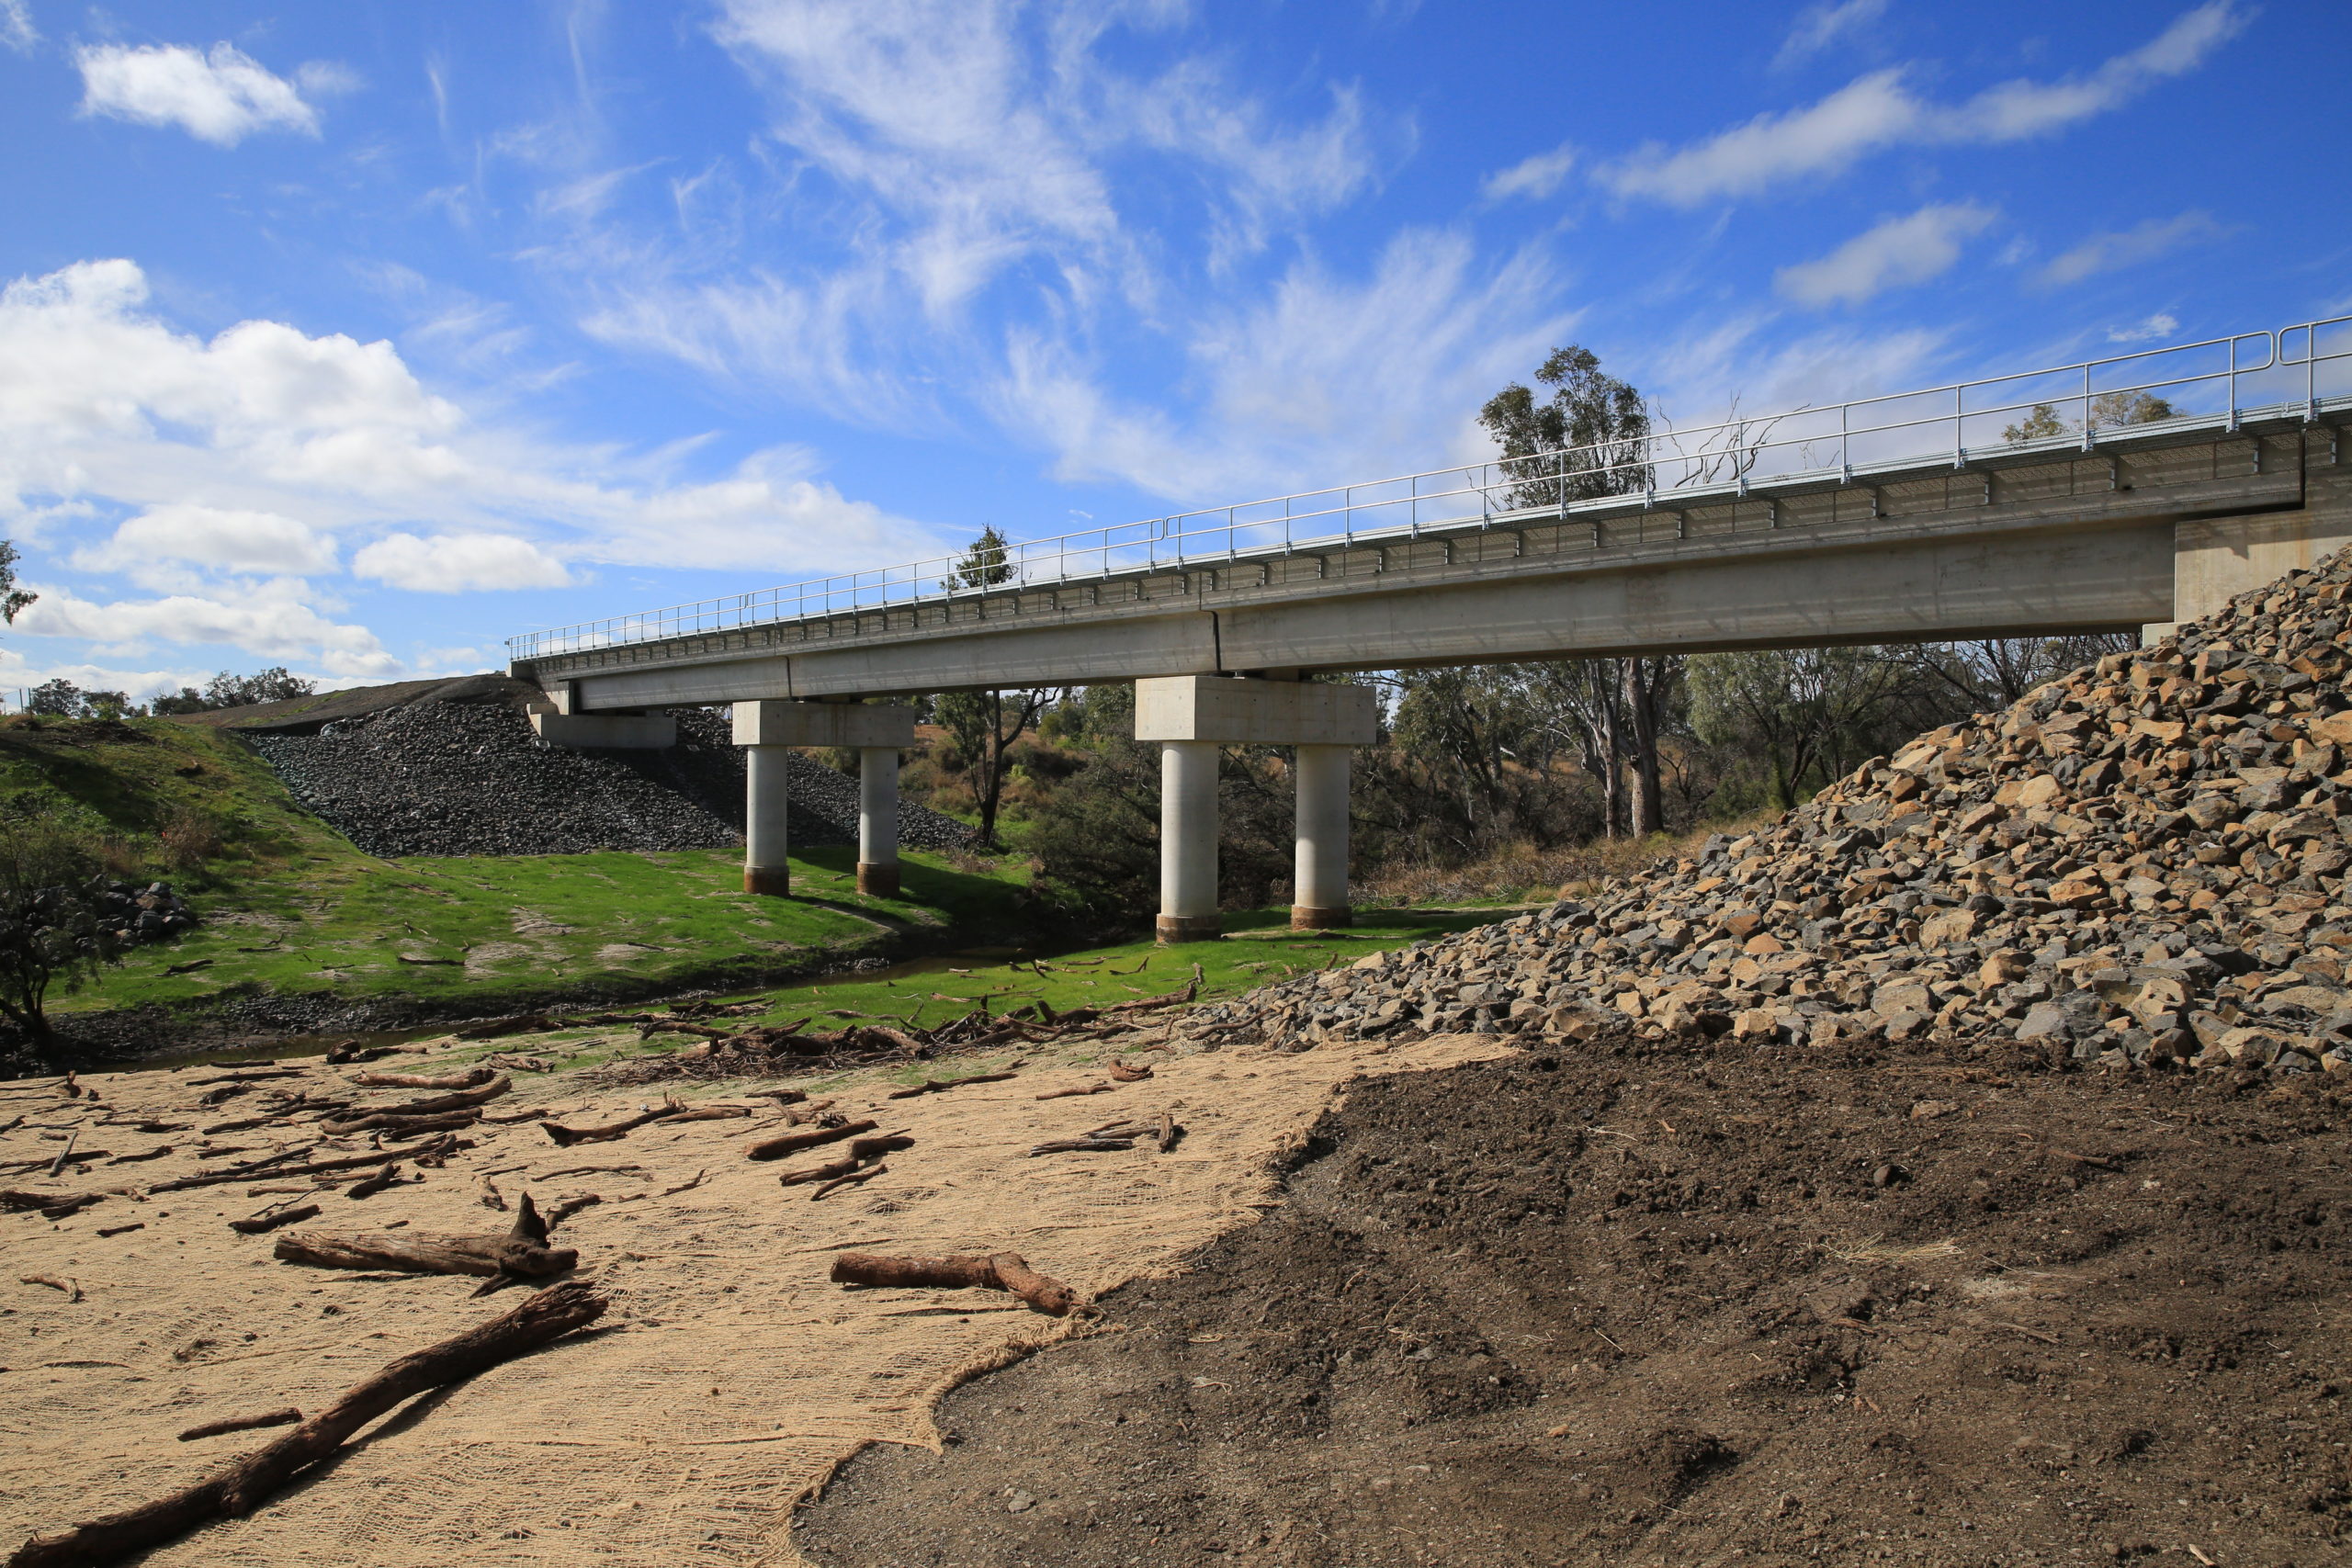 Croppa Creek Bridge with rehabilitated riverbank and Koala trees in the background